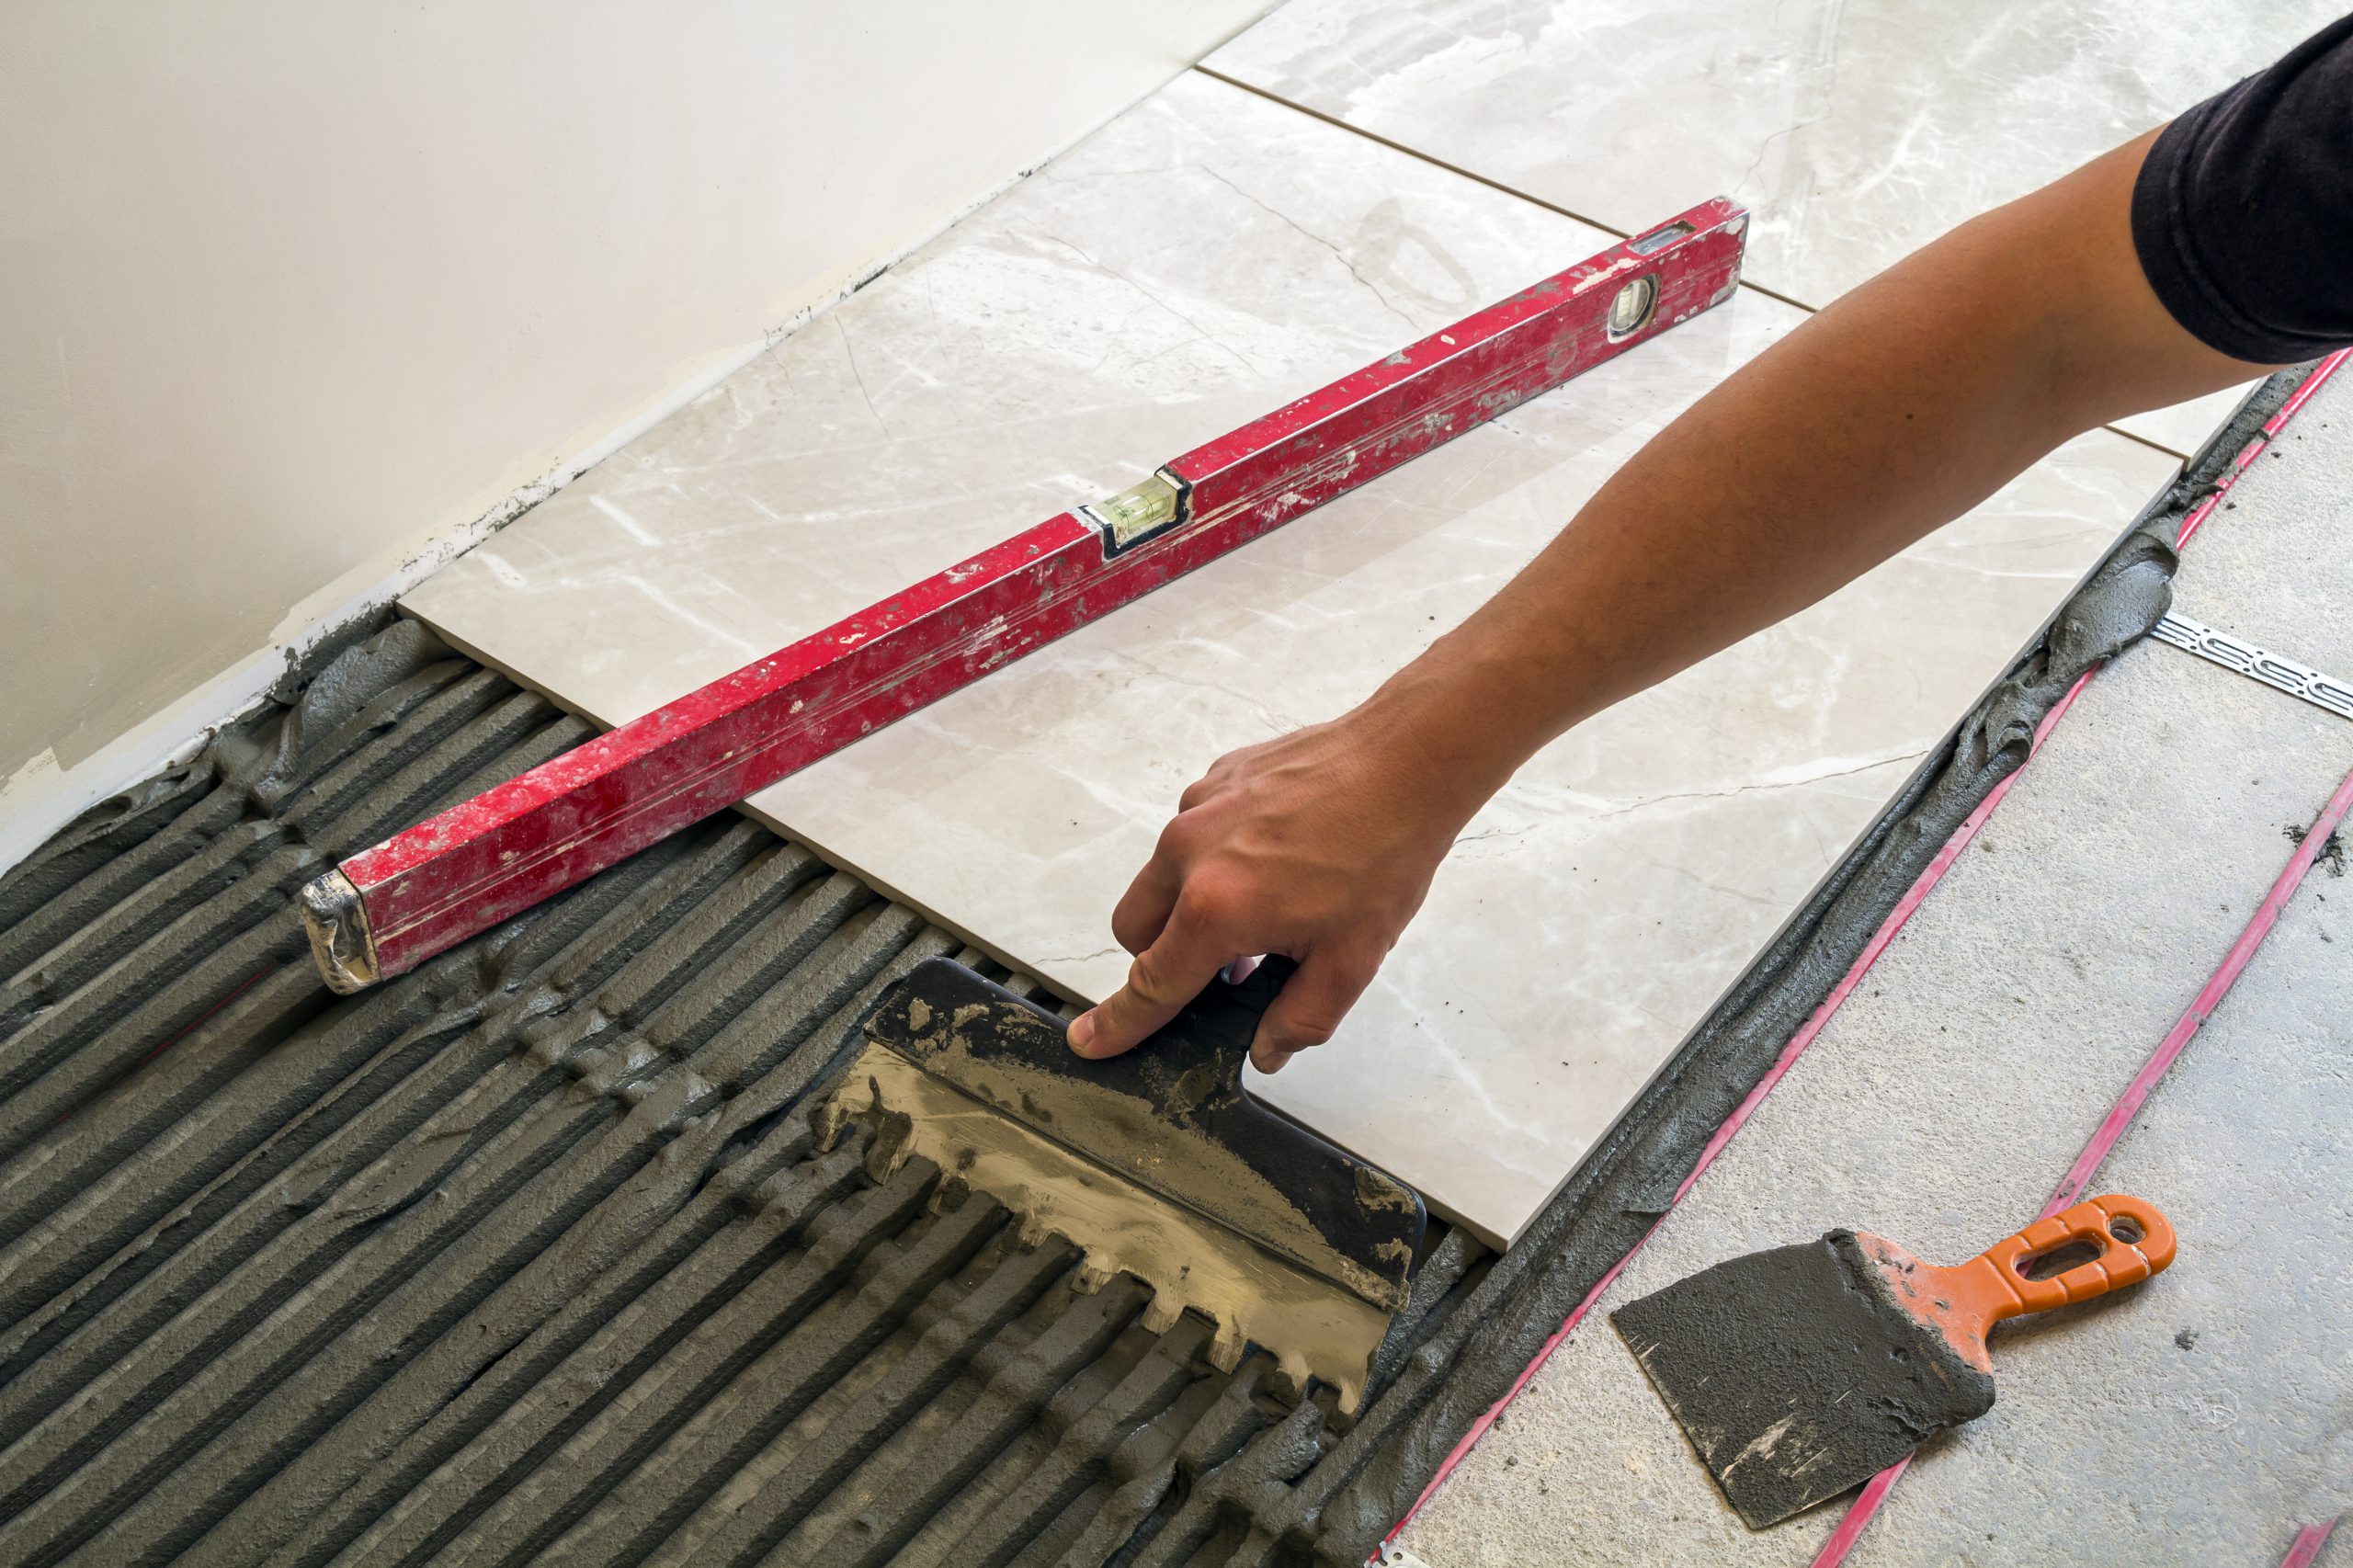 Ceramic Tiles And Tools For Tiler. Worker Hand Installing Floor Tiles. Home Improvement, Renovation Ceramic Tile Floor Adhesive, Mortar, Level.